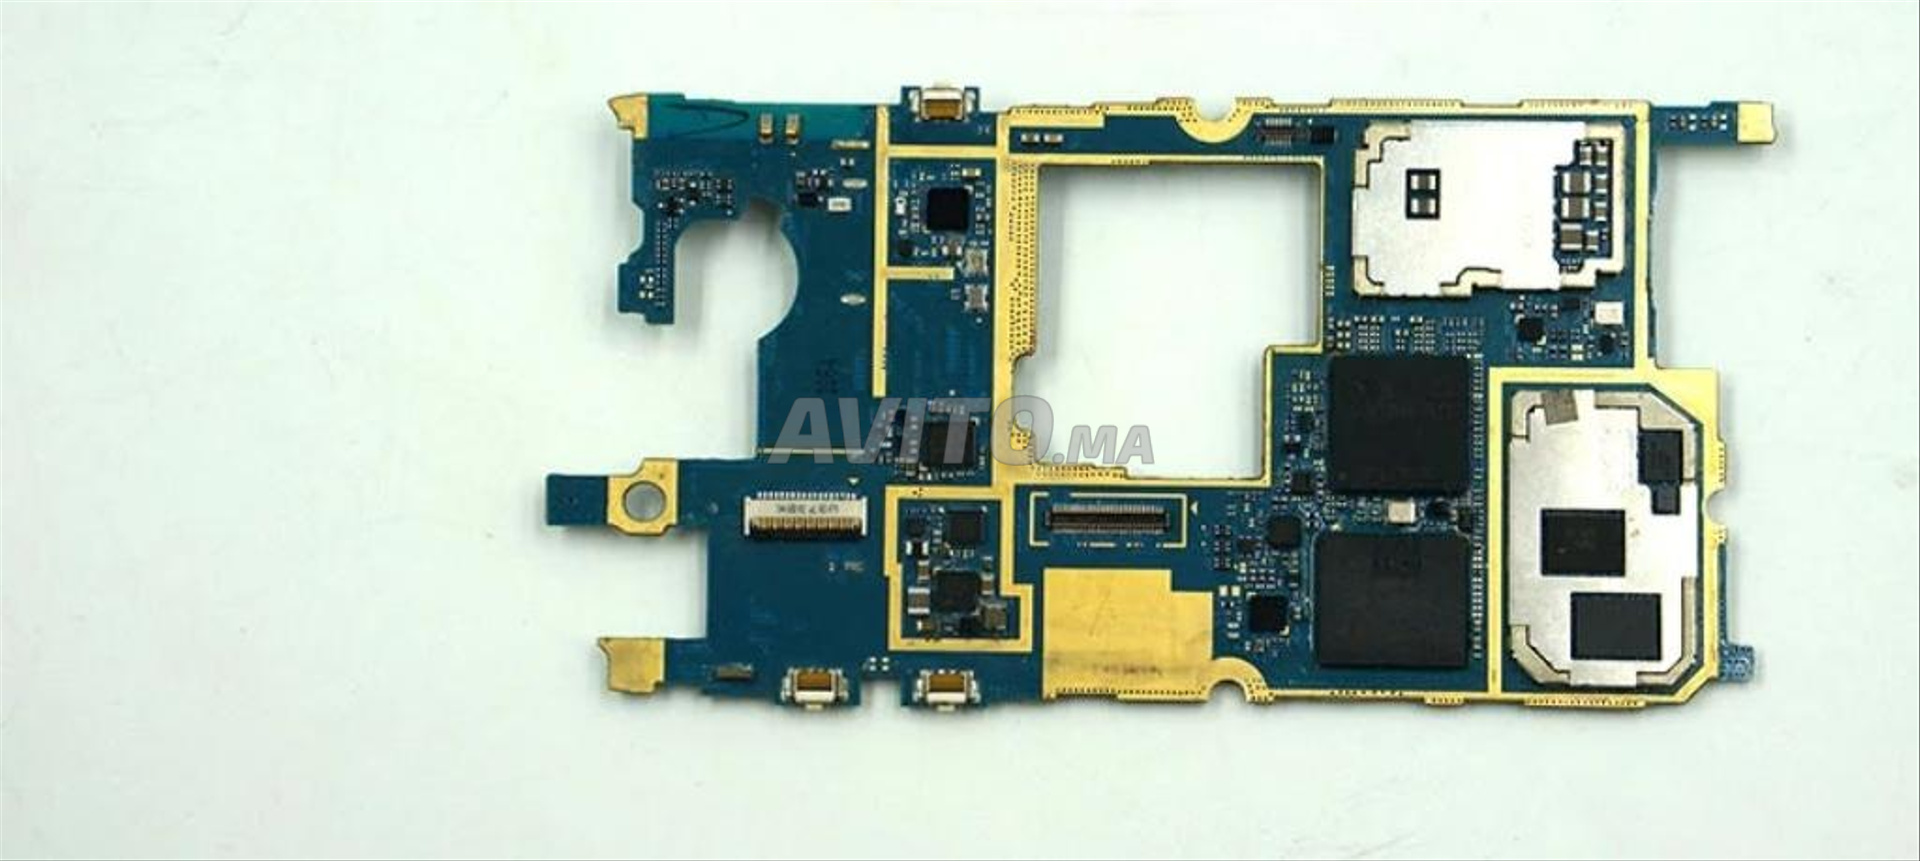 carte mère Samsung S4 mini  - 1